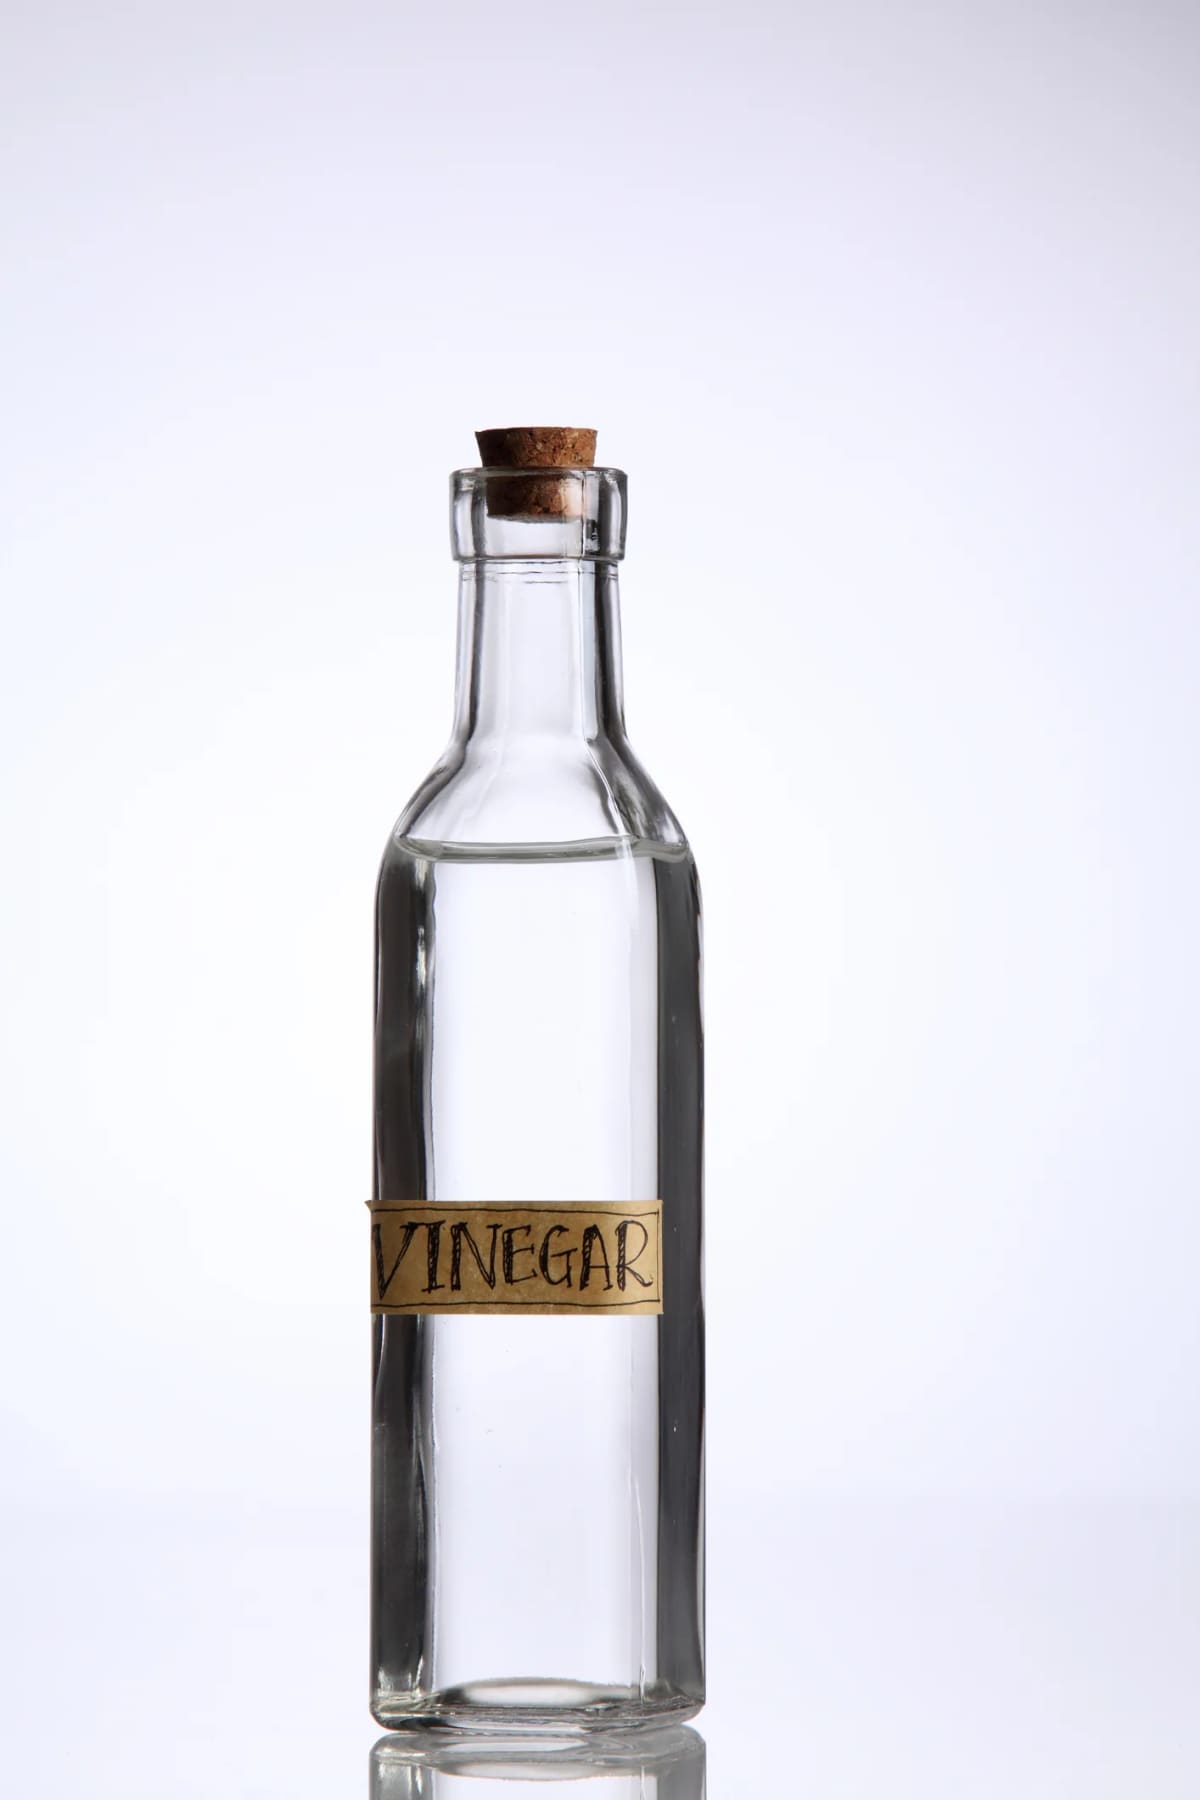 A bottle of vinegar